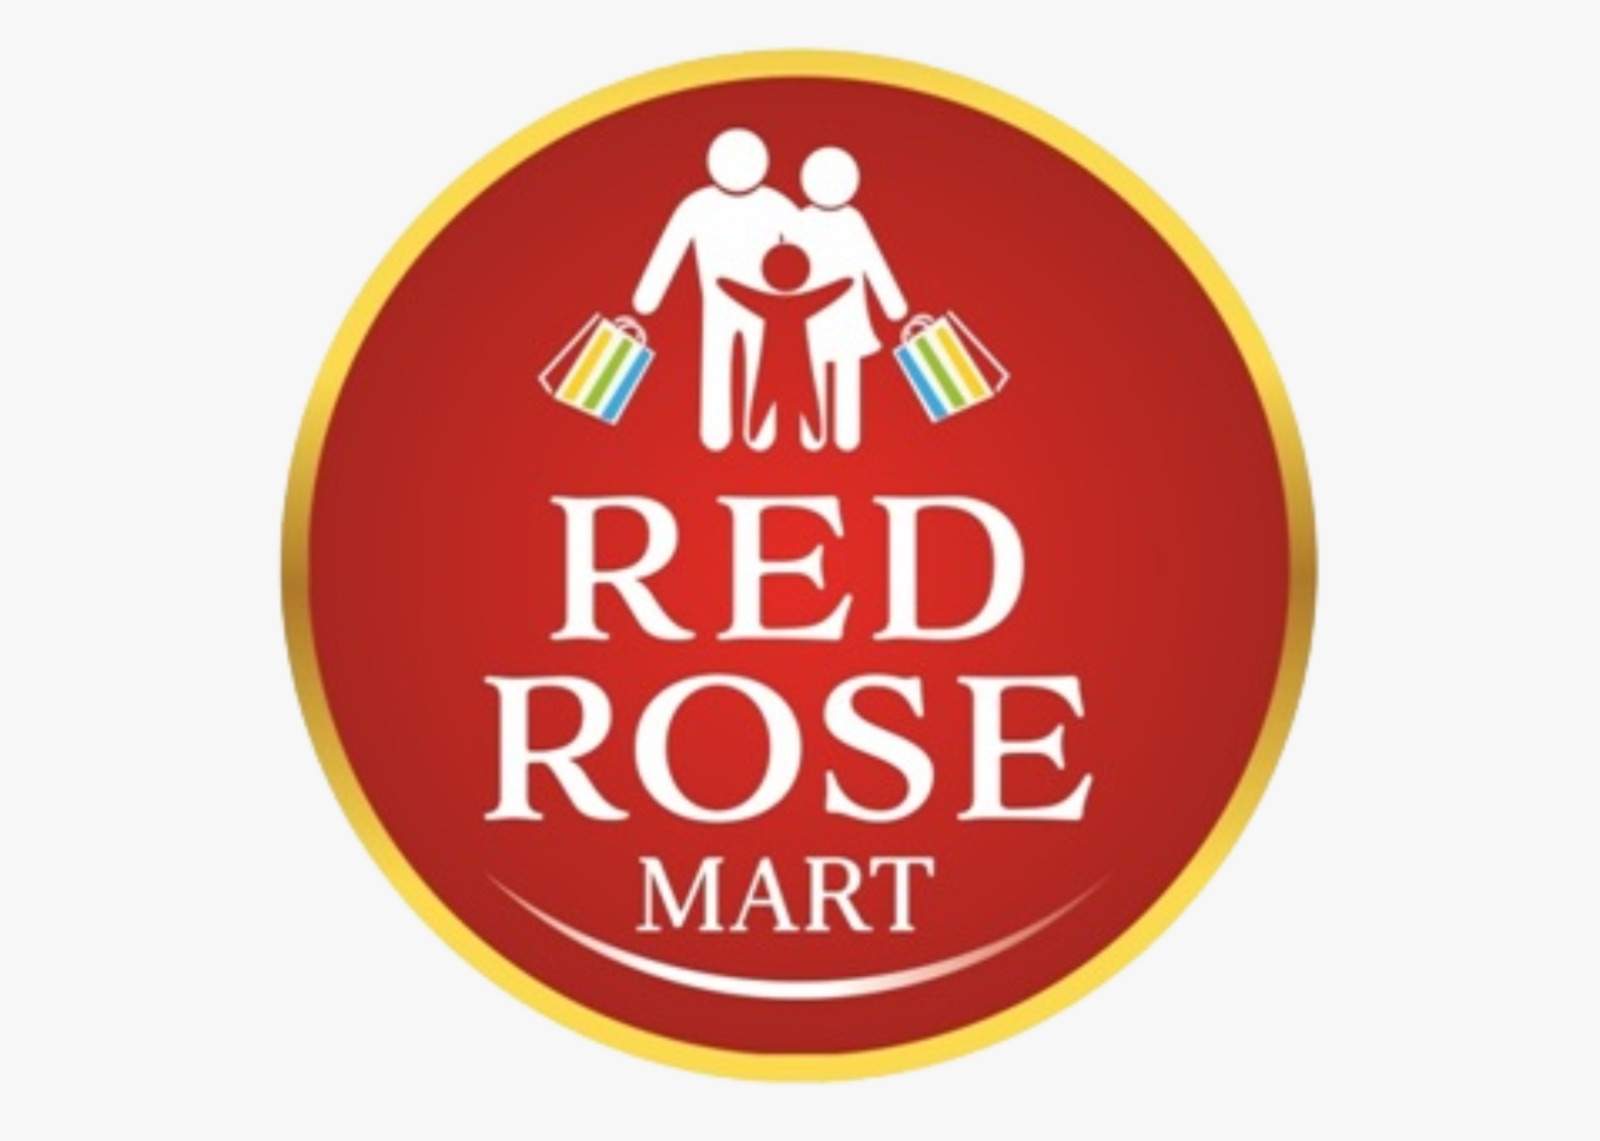 Red-Rose-Mart-ClintS-Logos-Codestrela